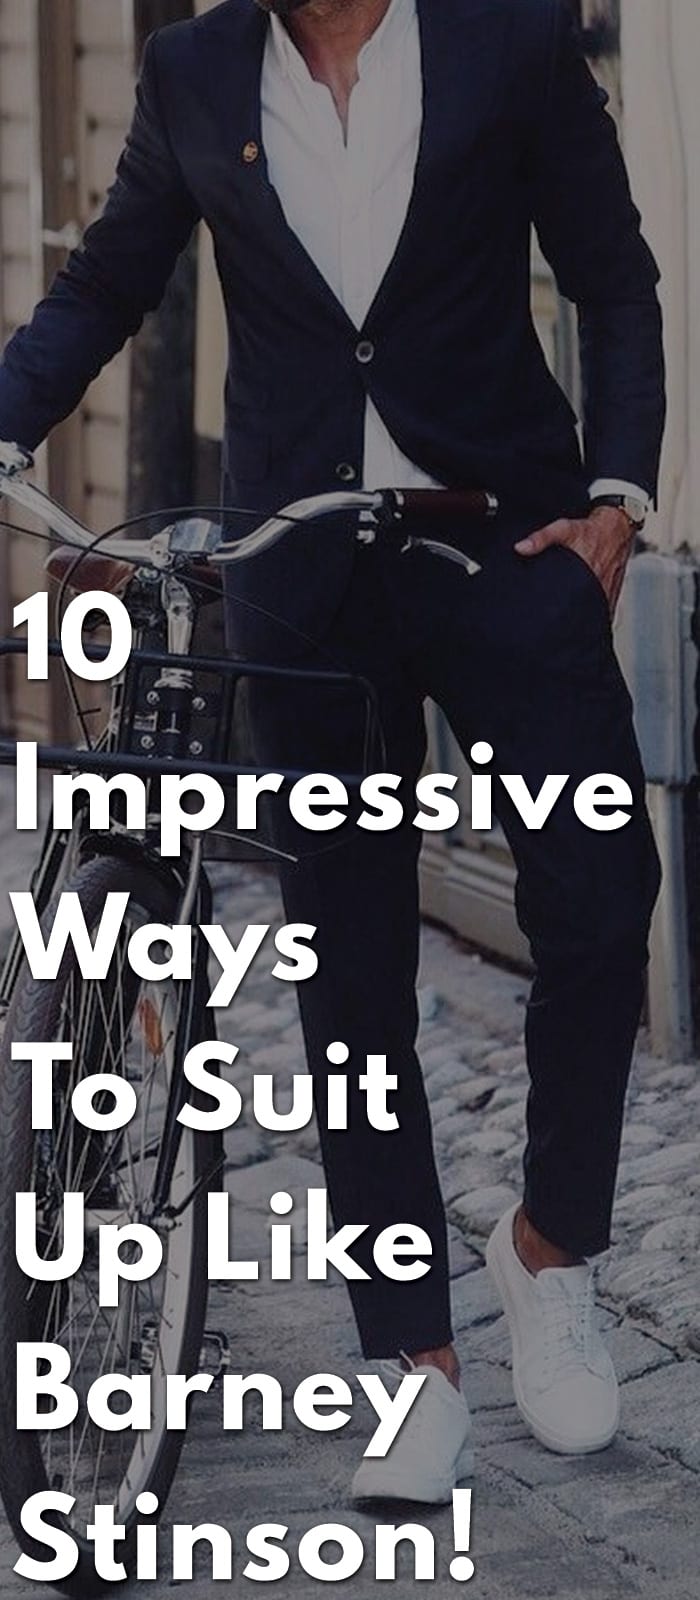 10-Impressive-Ways-To-Suit-Up-Like-Barney-Stinson!